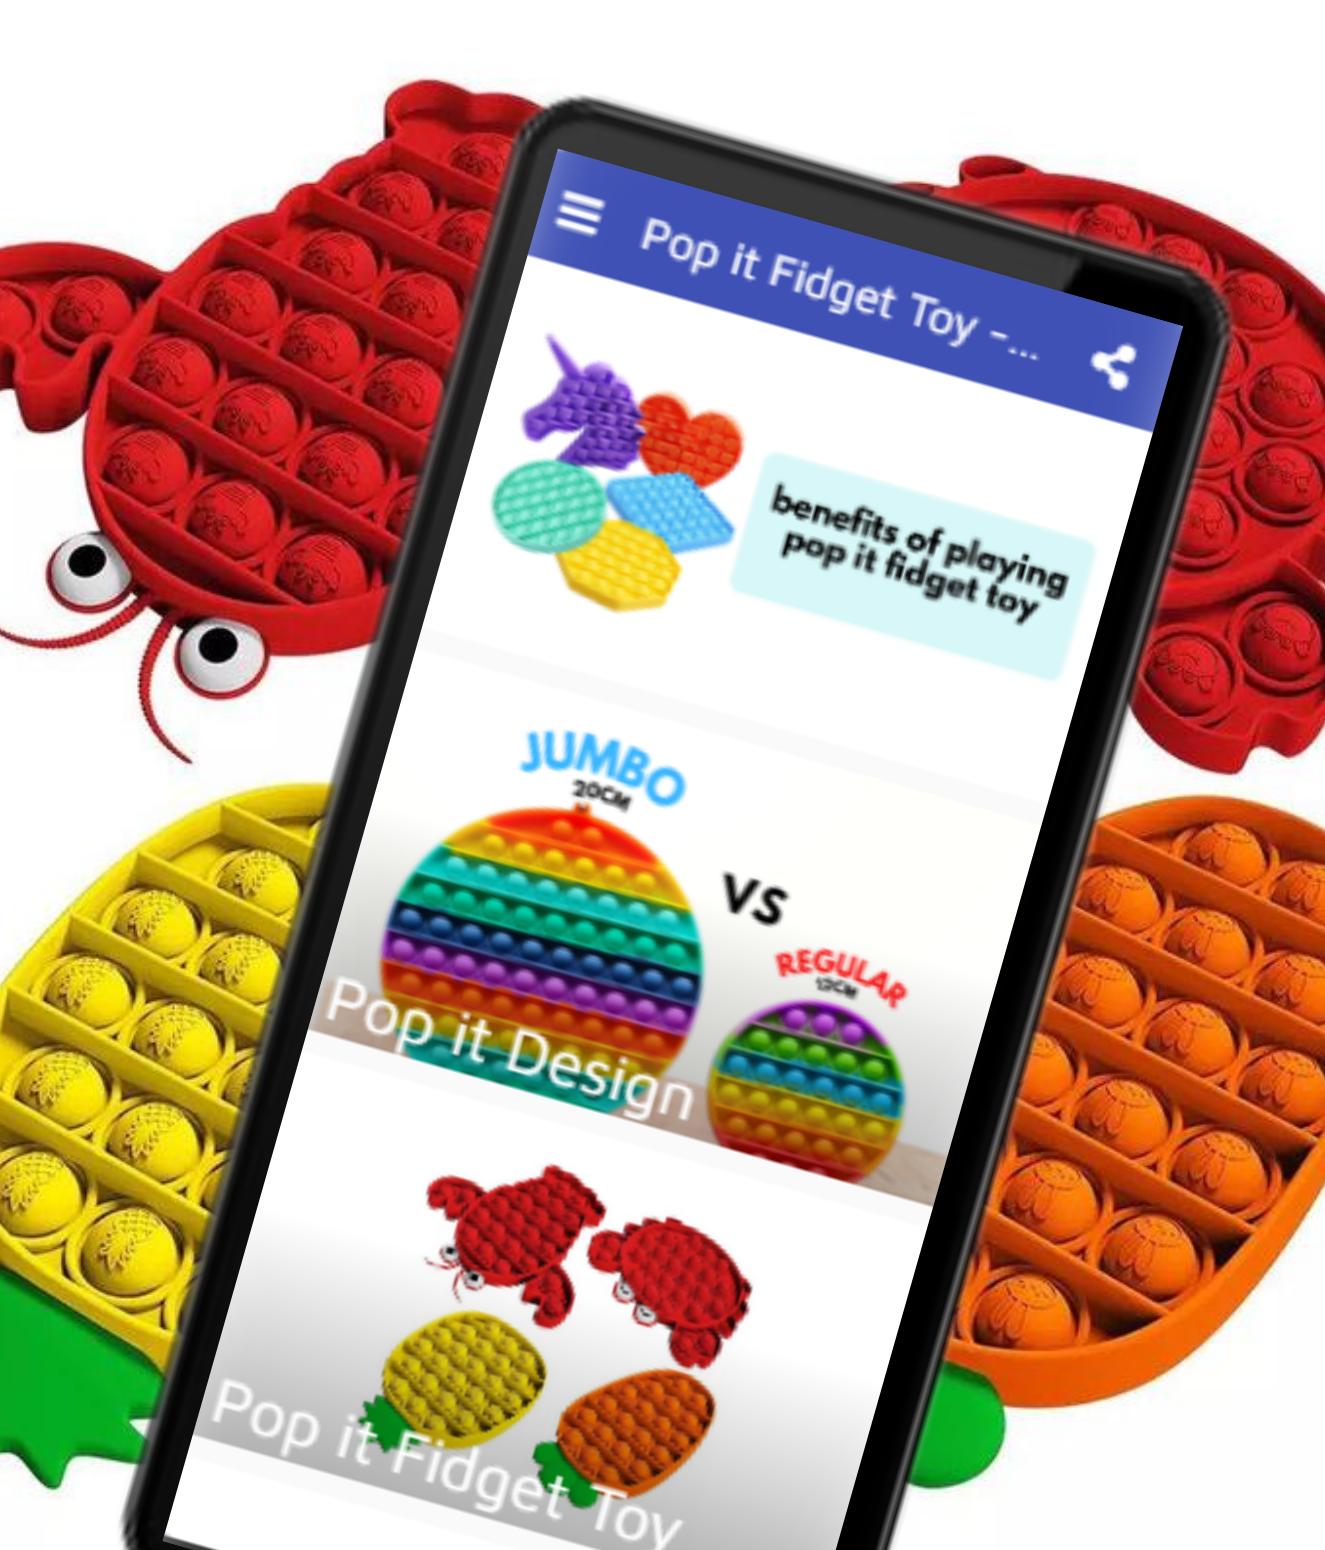 Pop it Fidget Toy - Benefits of Playing APK pour Android Télécharger